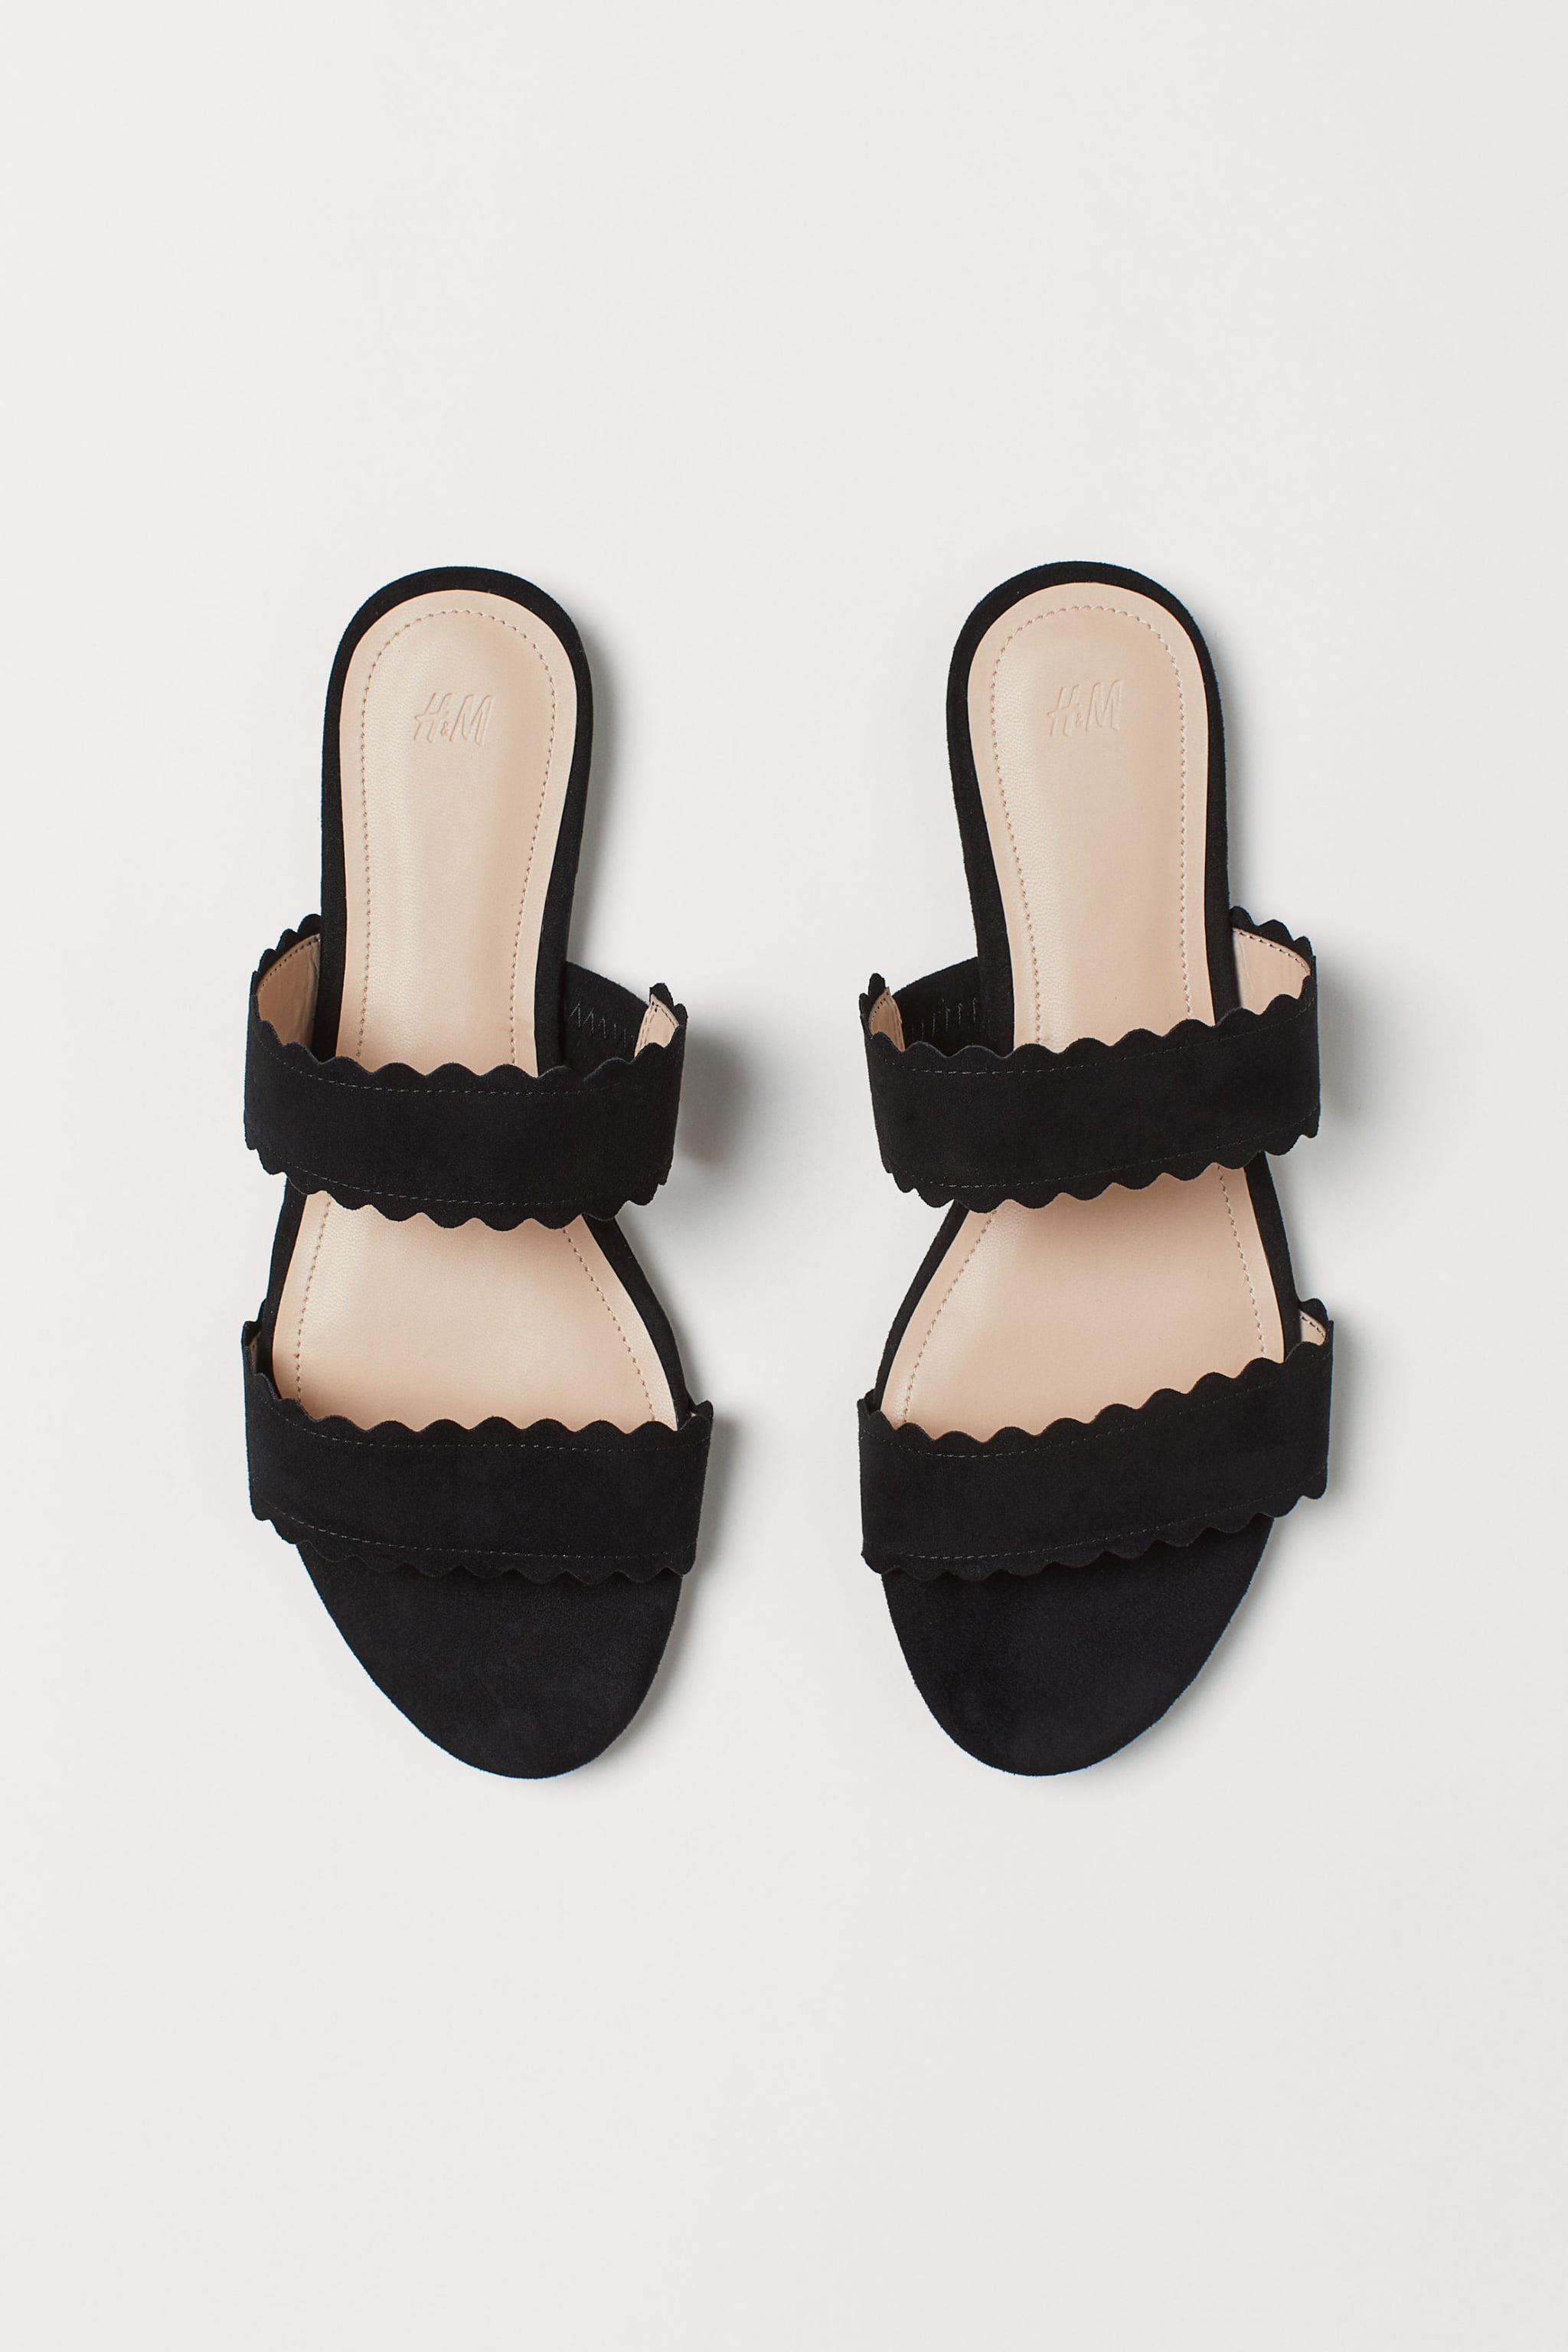 Best Black Sandals For Women | POPSUGAR 